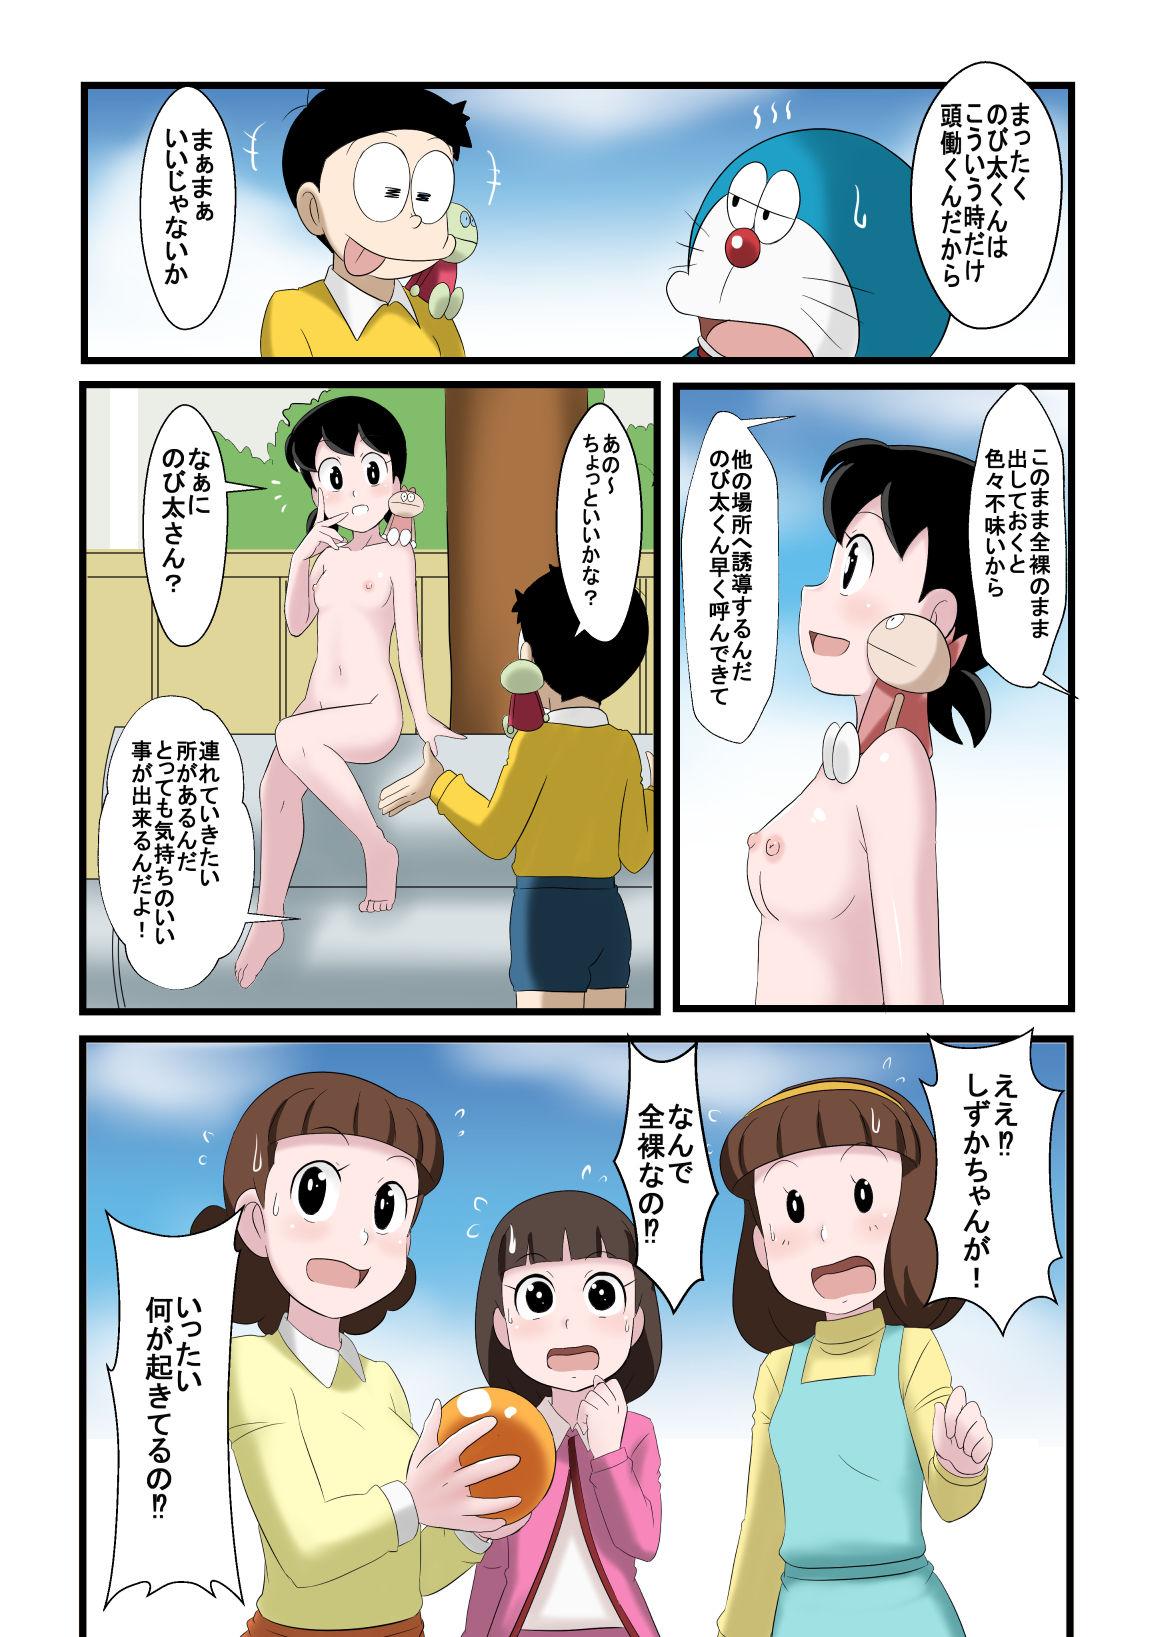 [Circle Takaya] if -sizuka- 2 (Doraemon) 4